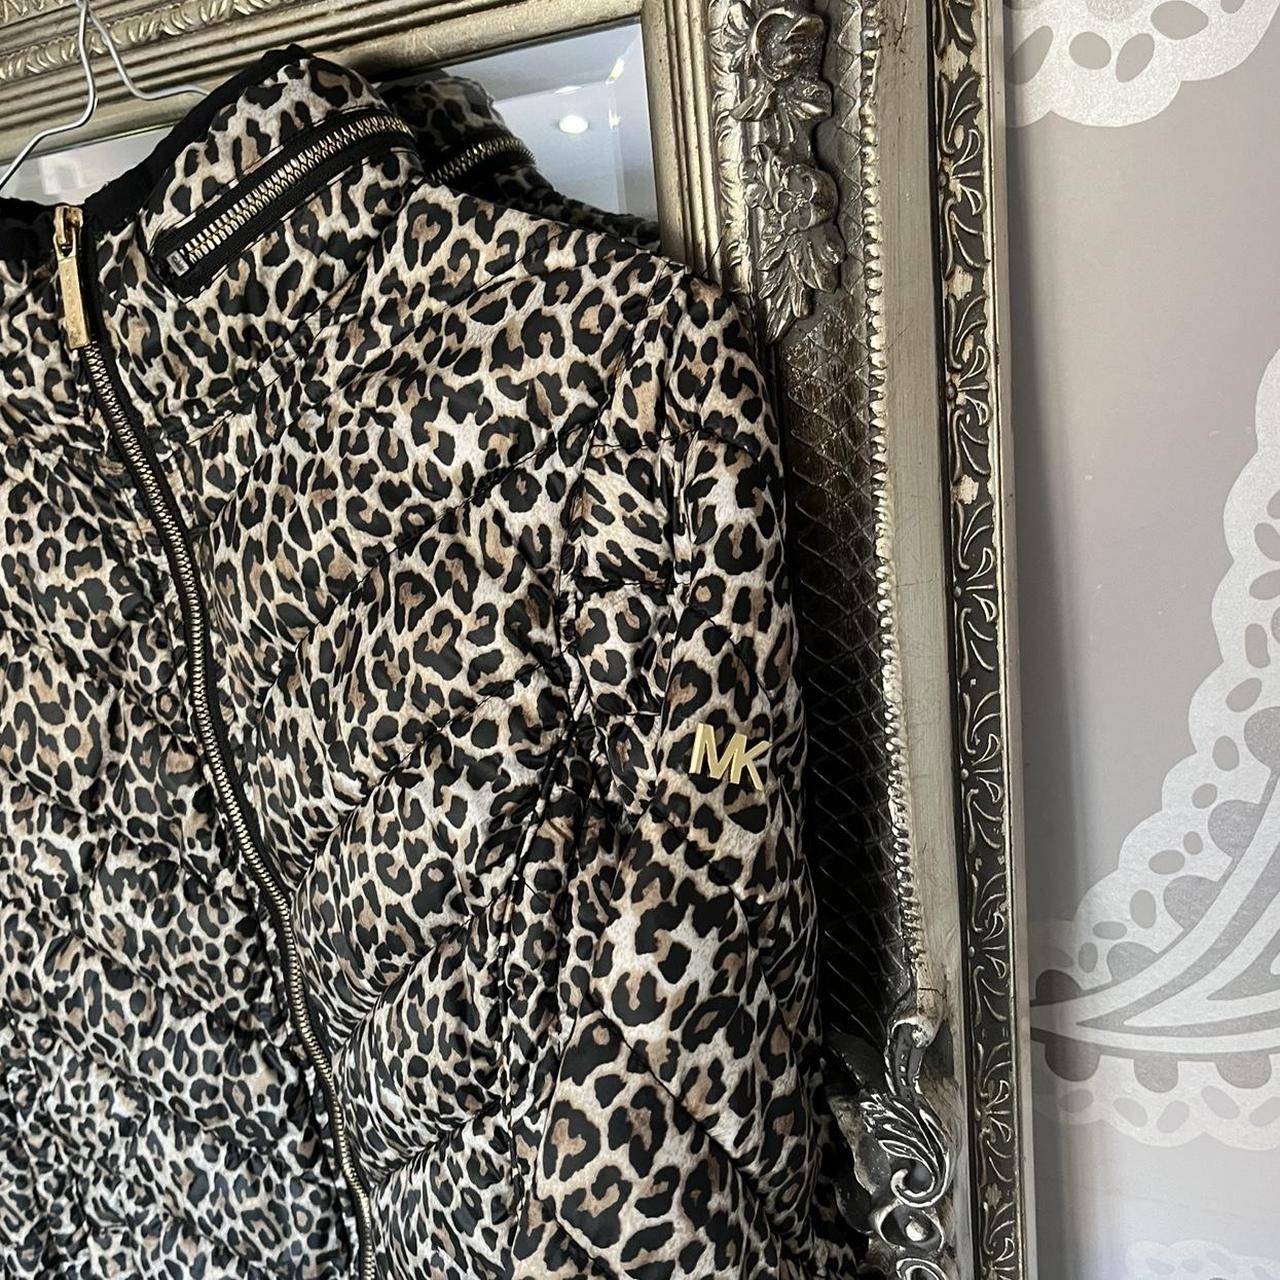 Michael Kors Cheetah Print Coats  Jackets  Mercari